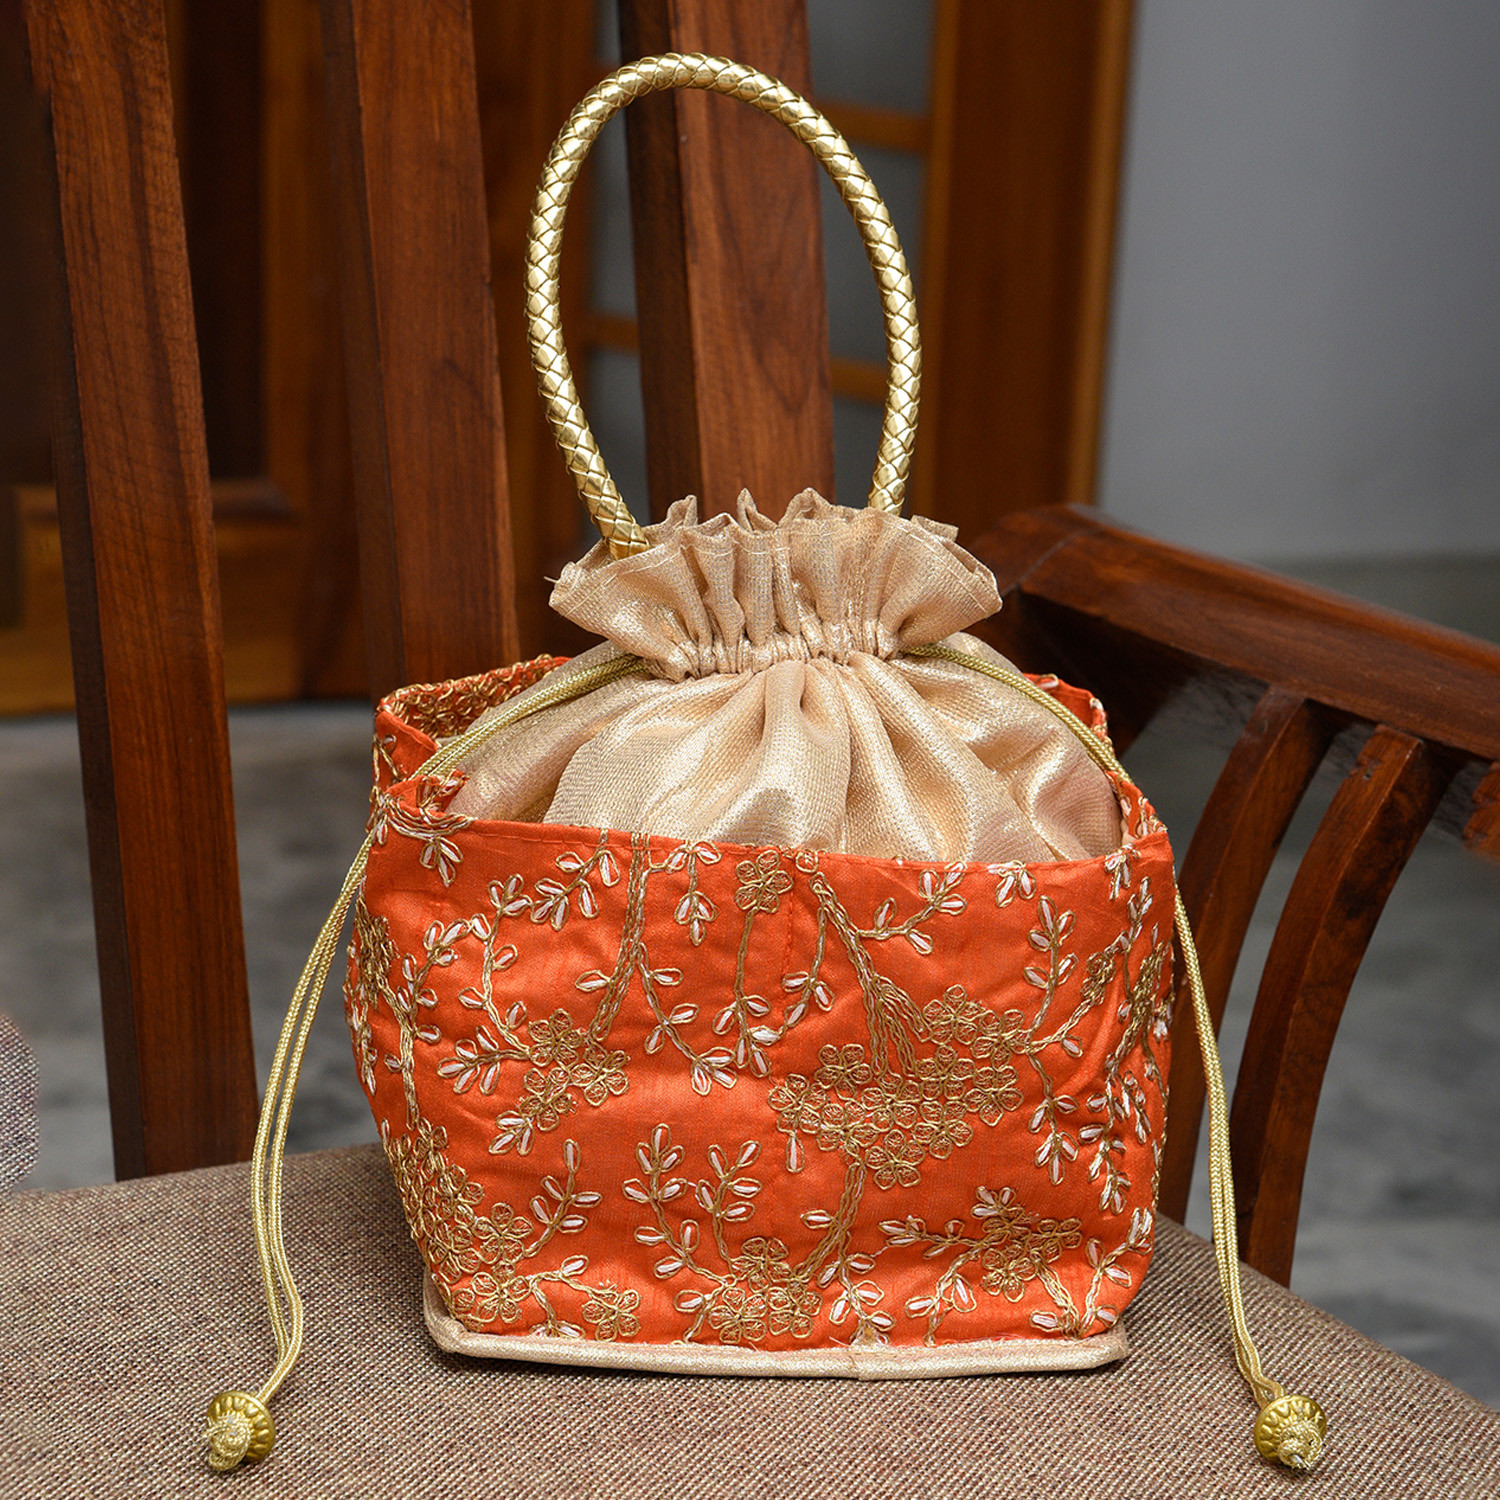 Kuber Industries Hand Bag|Silk Embroidery Drawstring Bag|Traditional Indian Handmade 5 Pocket Potli Bag with Golden Handle (Orange)